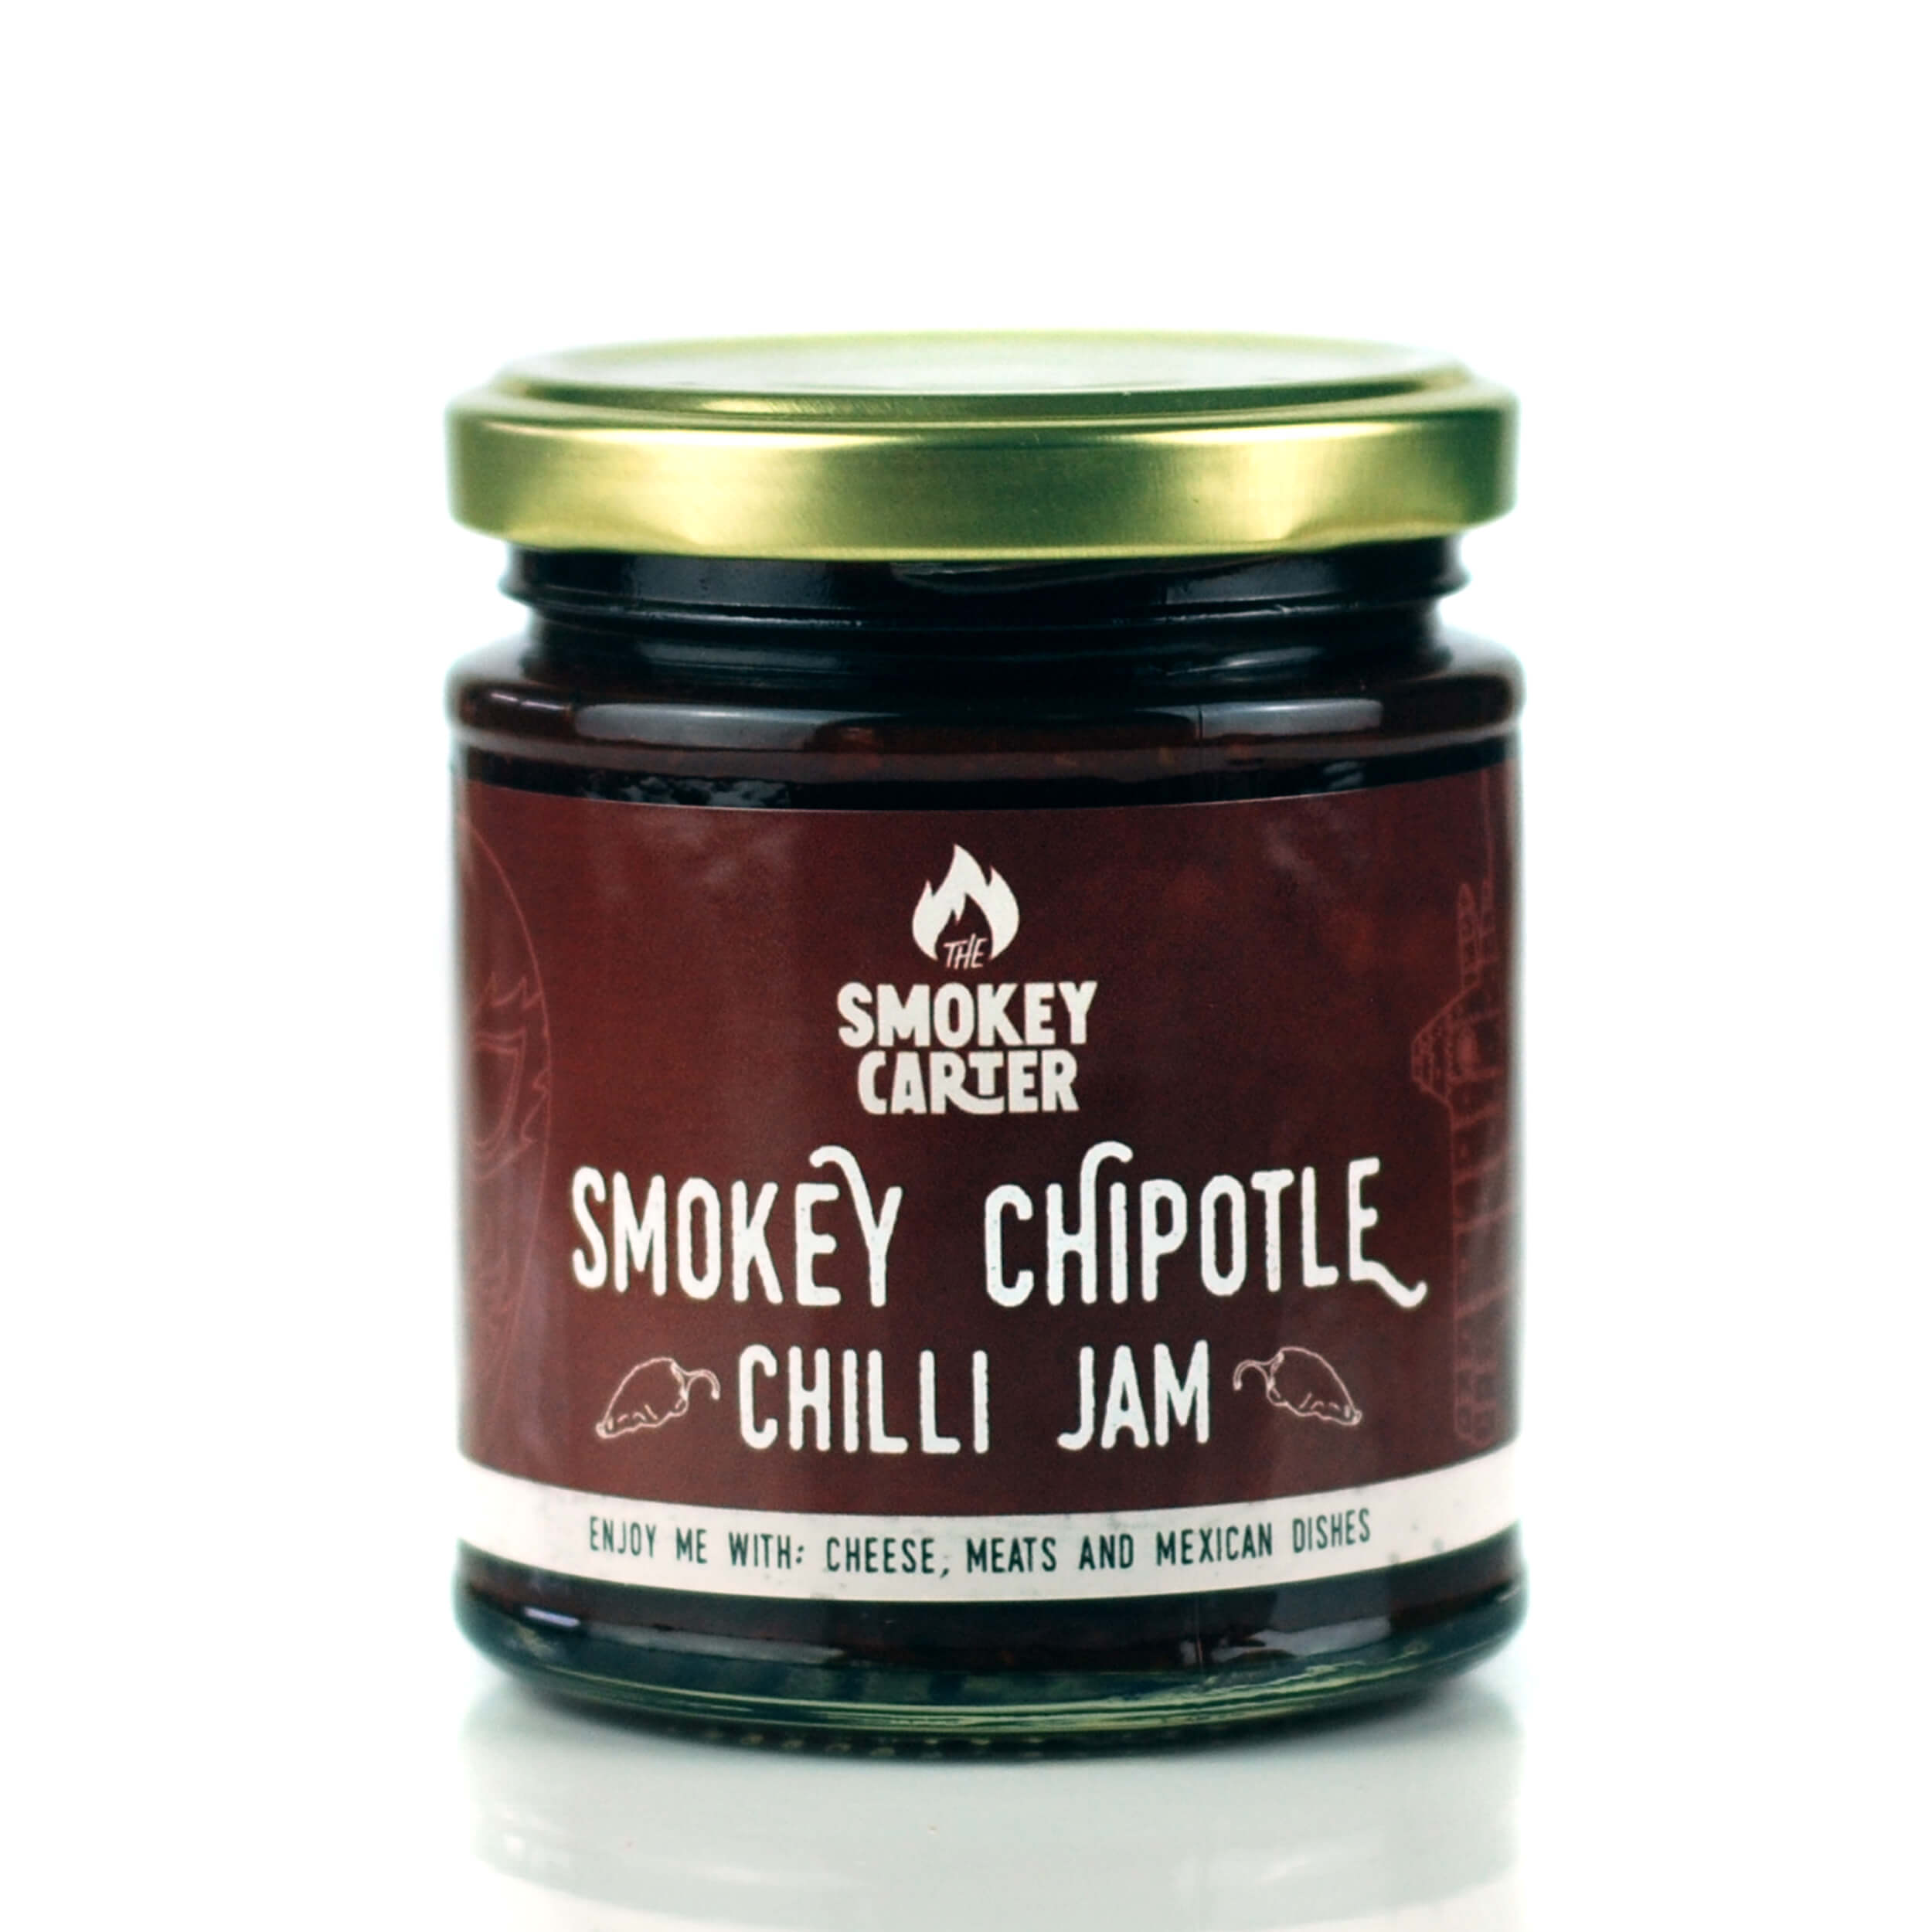 Smokey Chipotle Chilli Jam